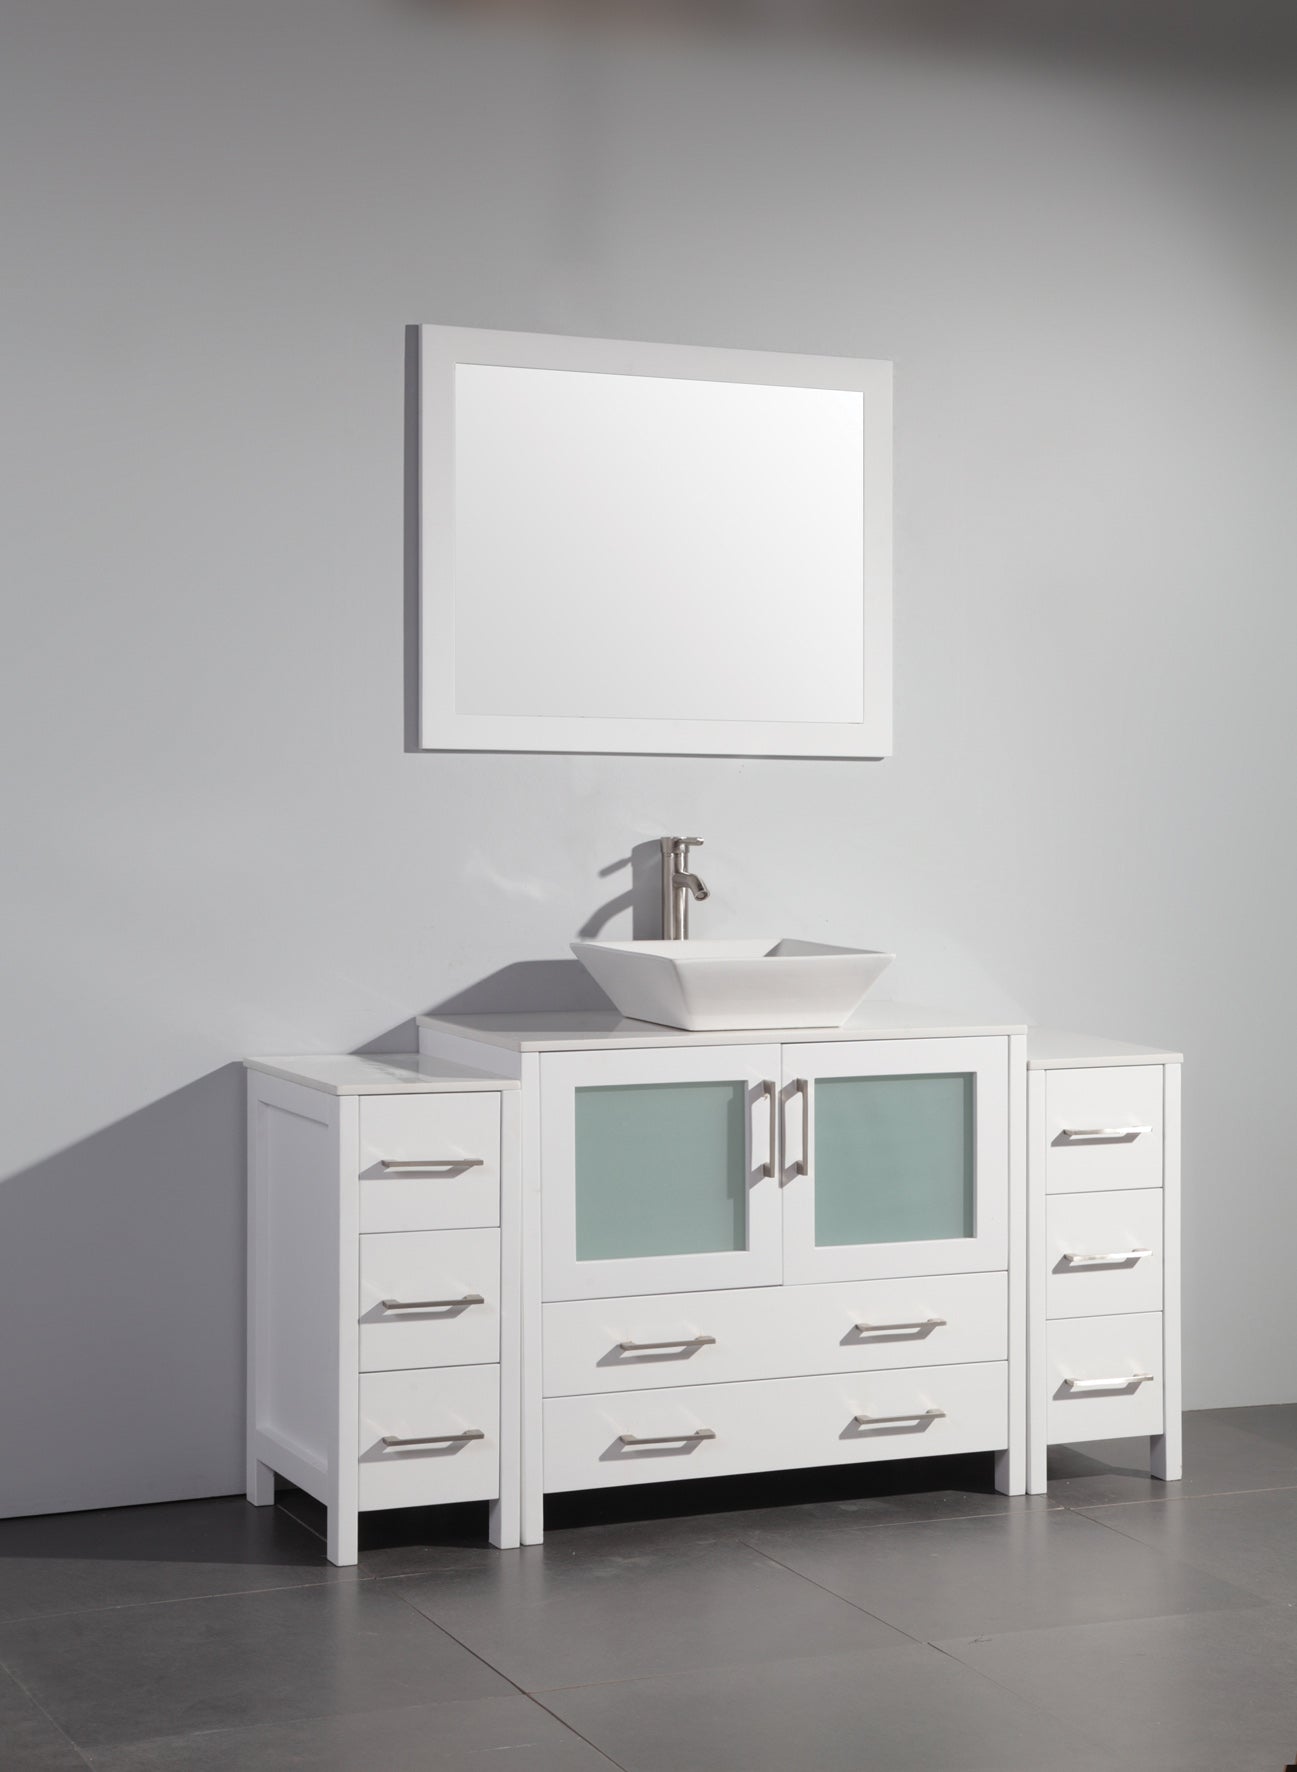 Vanity Art - Monaco 60" Single Vessel Sink Bathroom Vanity Set with Sink and Mirror - 2 Side Cabinets - Bhdepot 